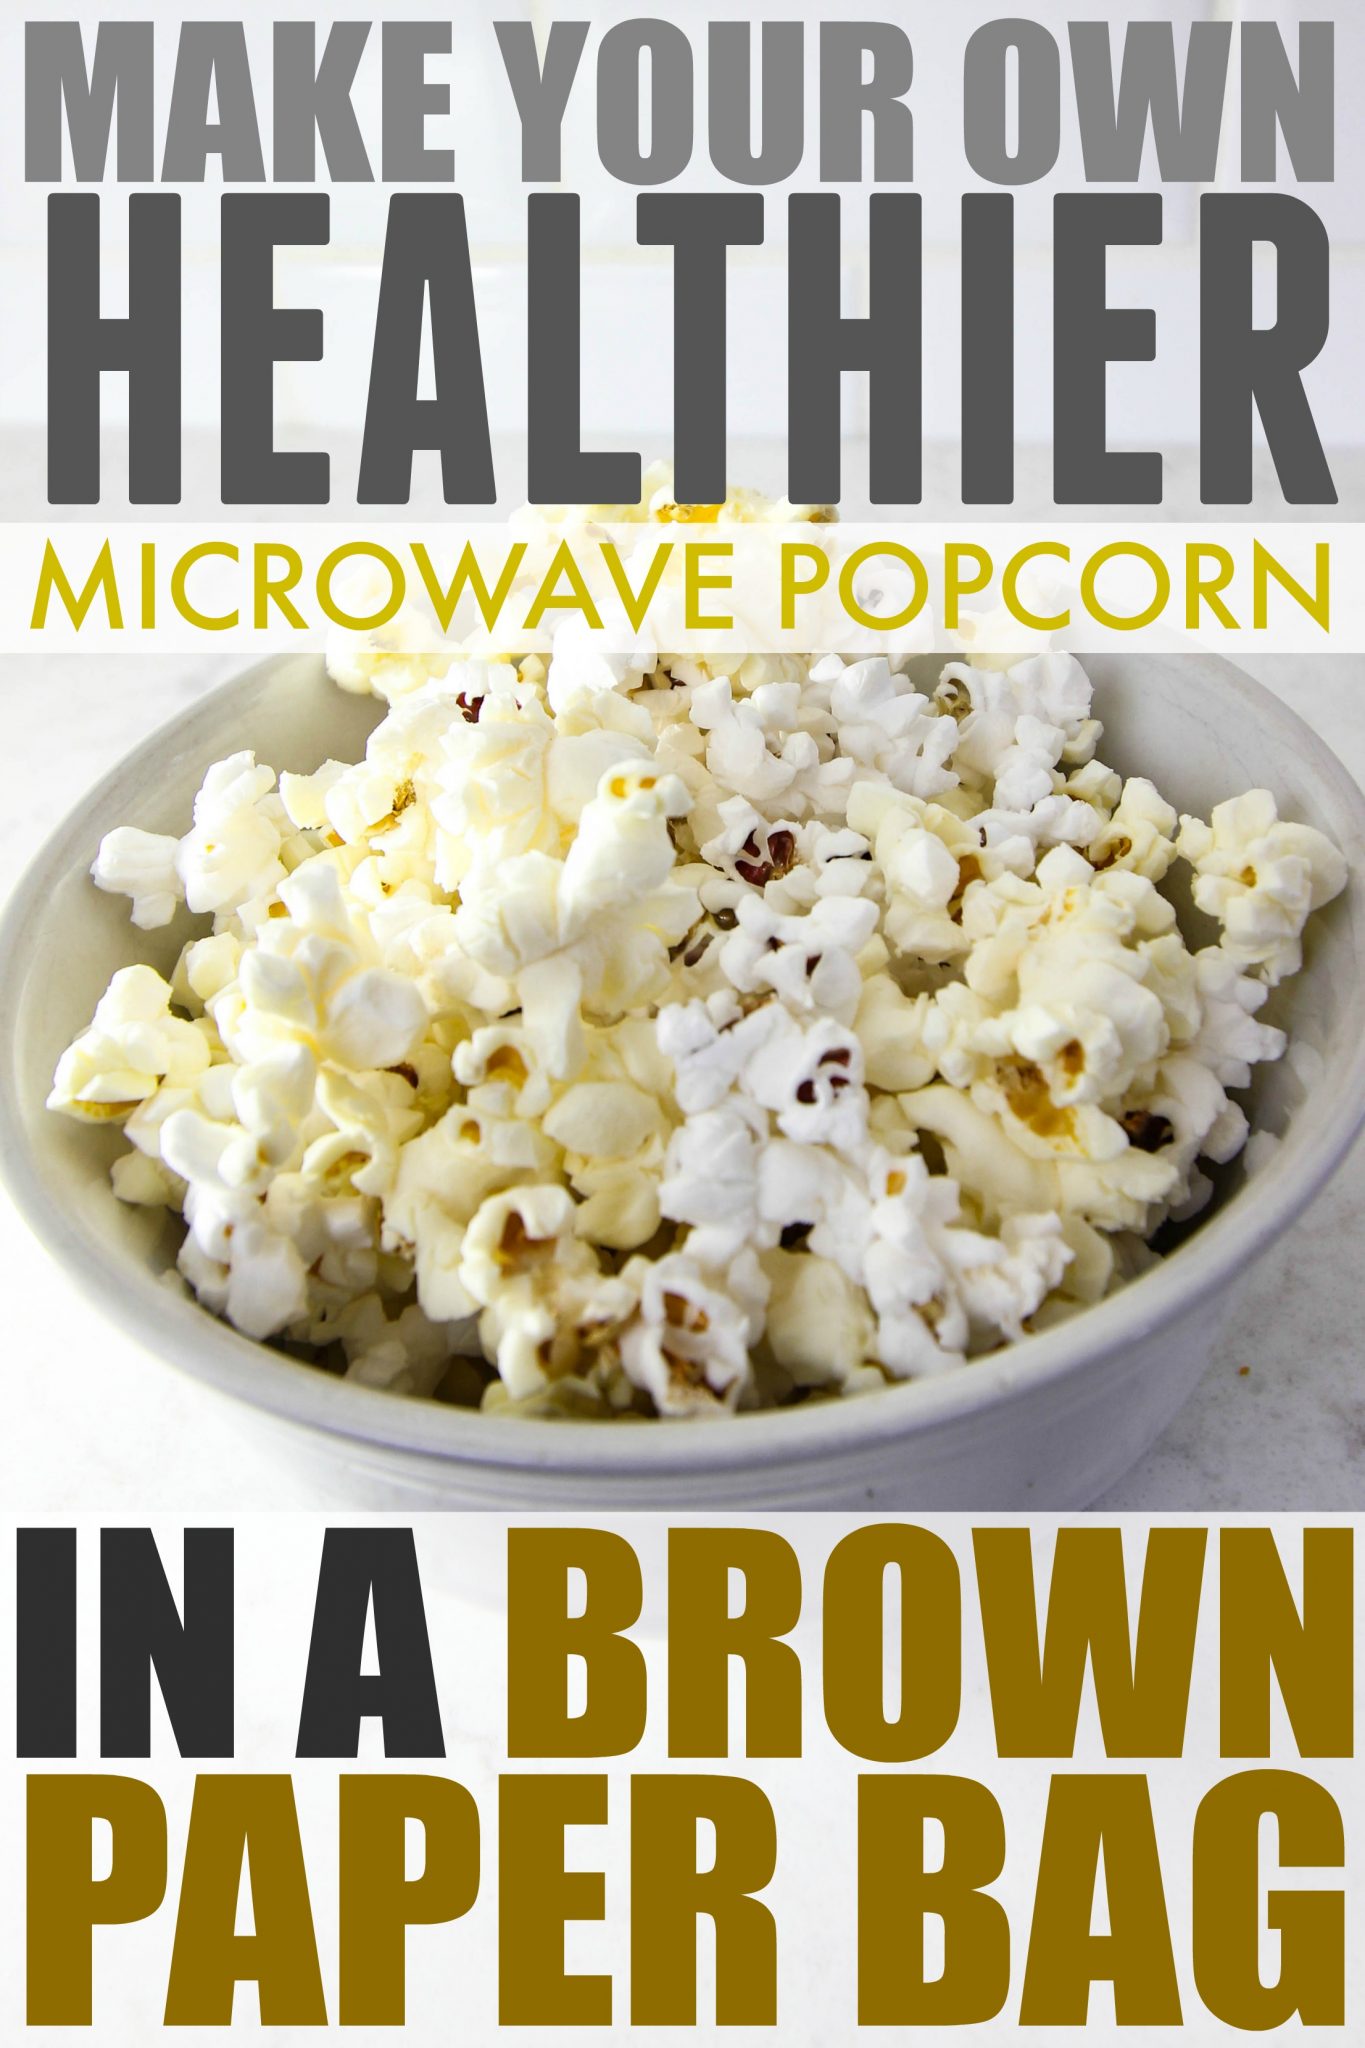 Fun trick for healthier DIY microwave popcorn using a plain paper bag!